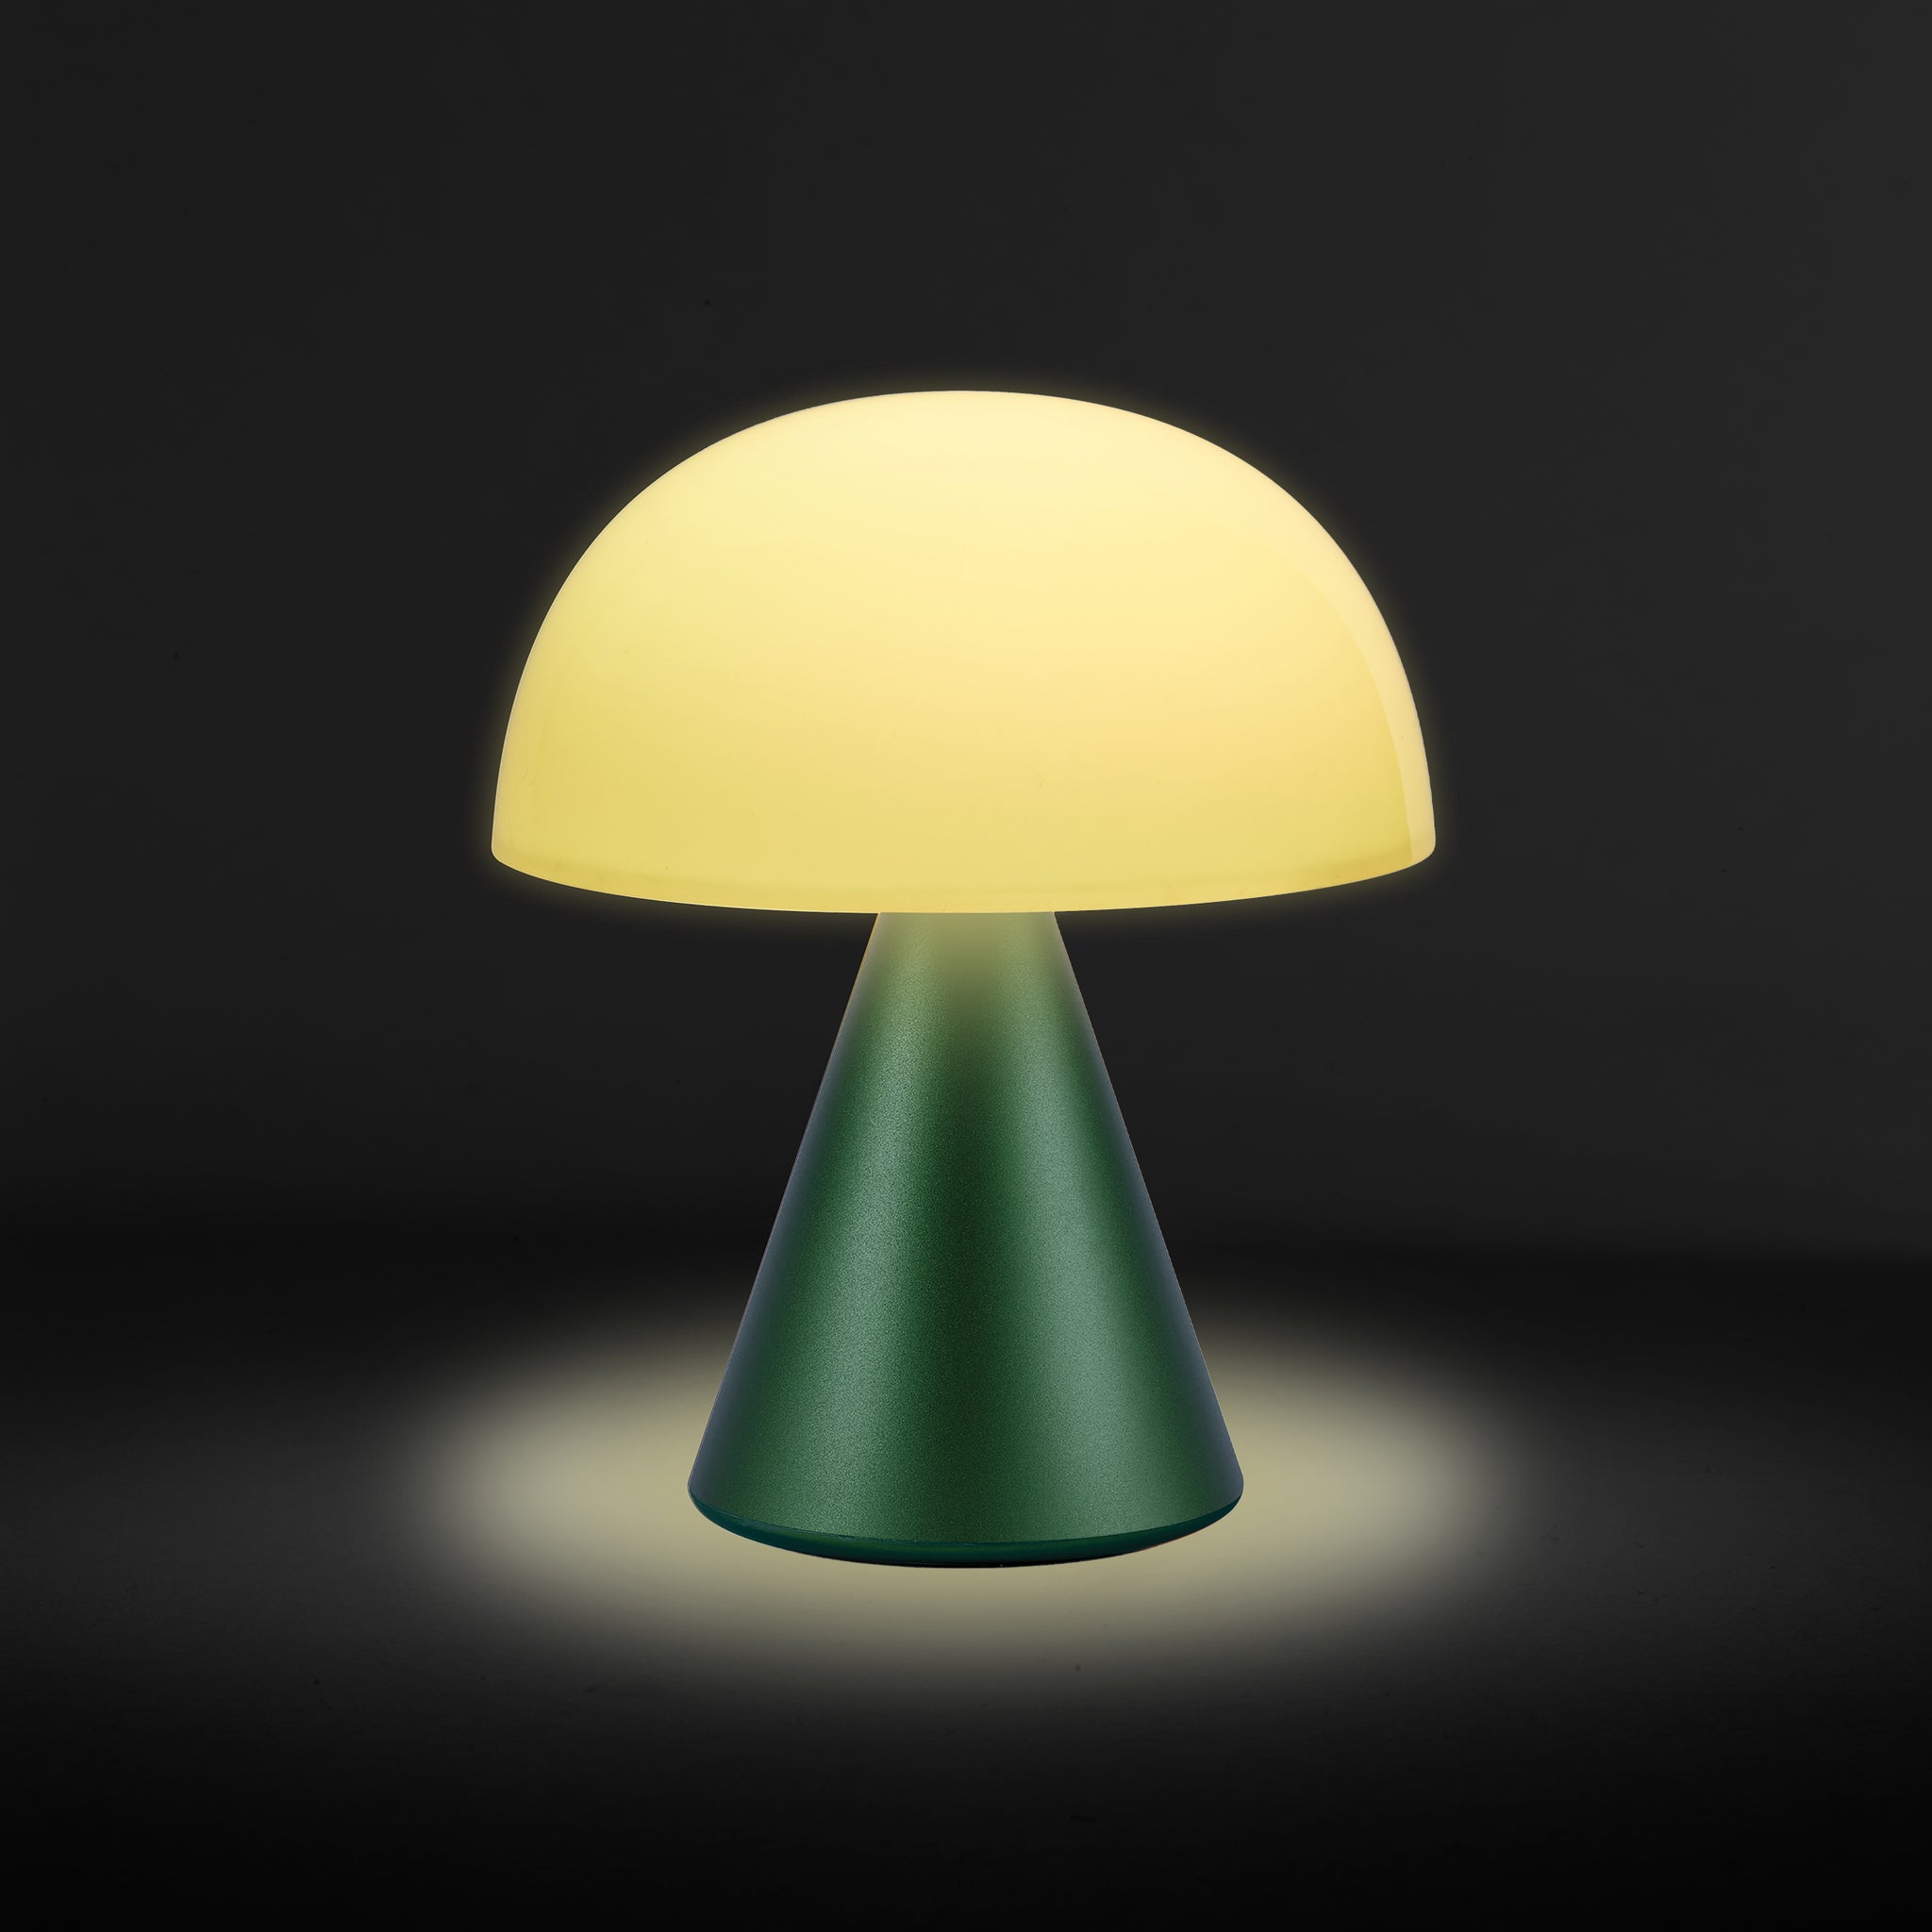 Lexon Mina Medium Donker Groen│Oplaadbare Led-Lamp│art. LH64DG1│geel licht met donkere achtergrond